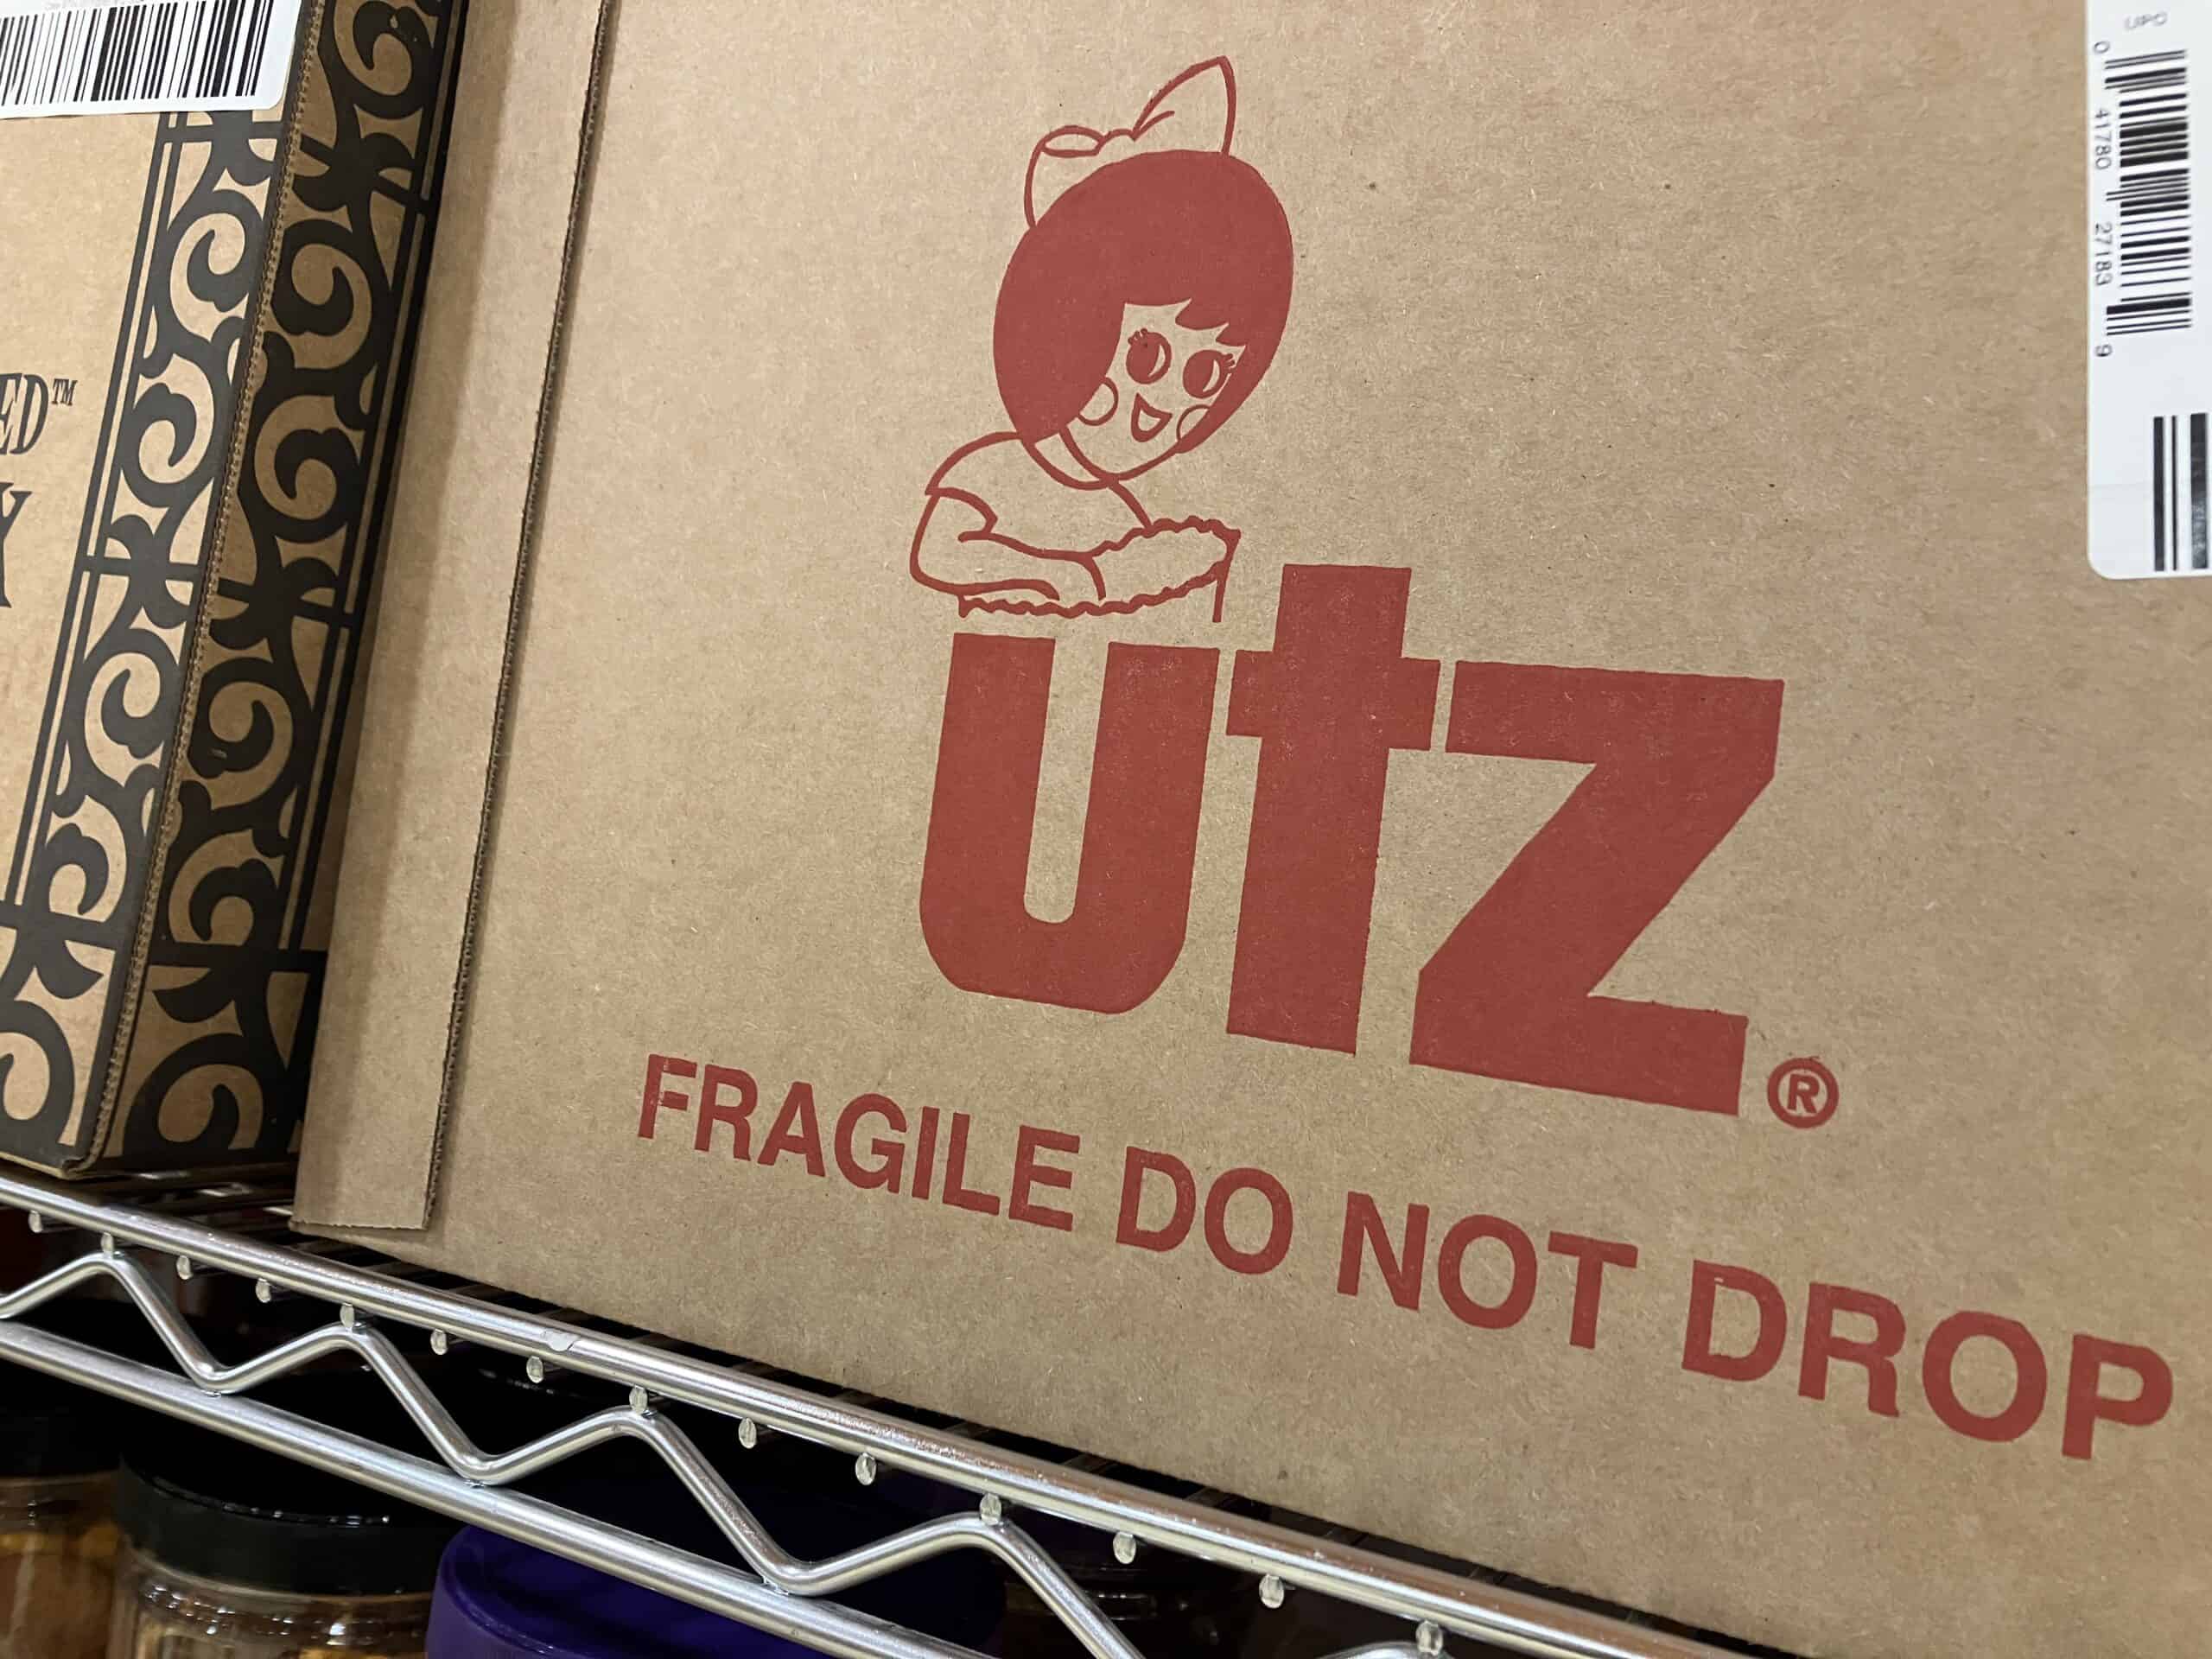 Box of Utz pretzels